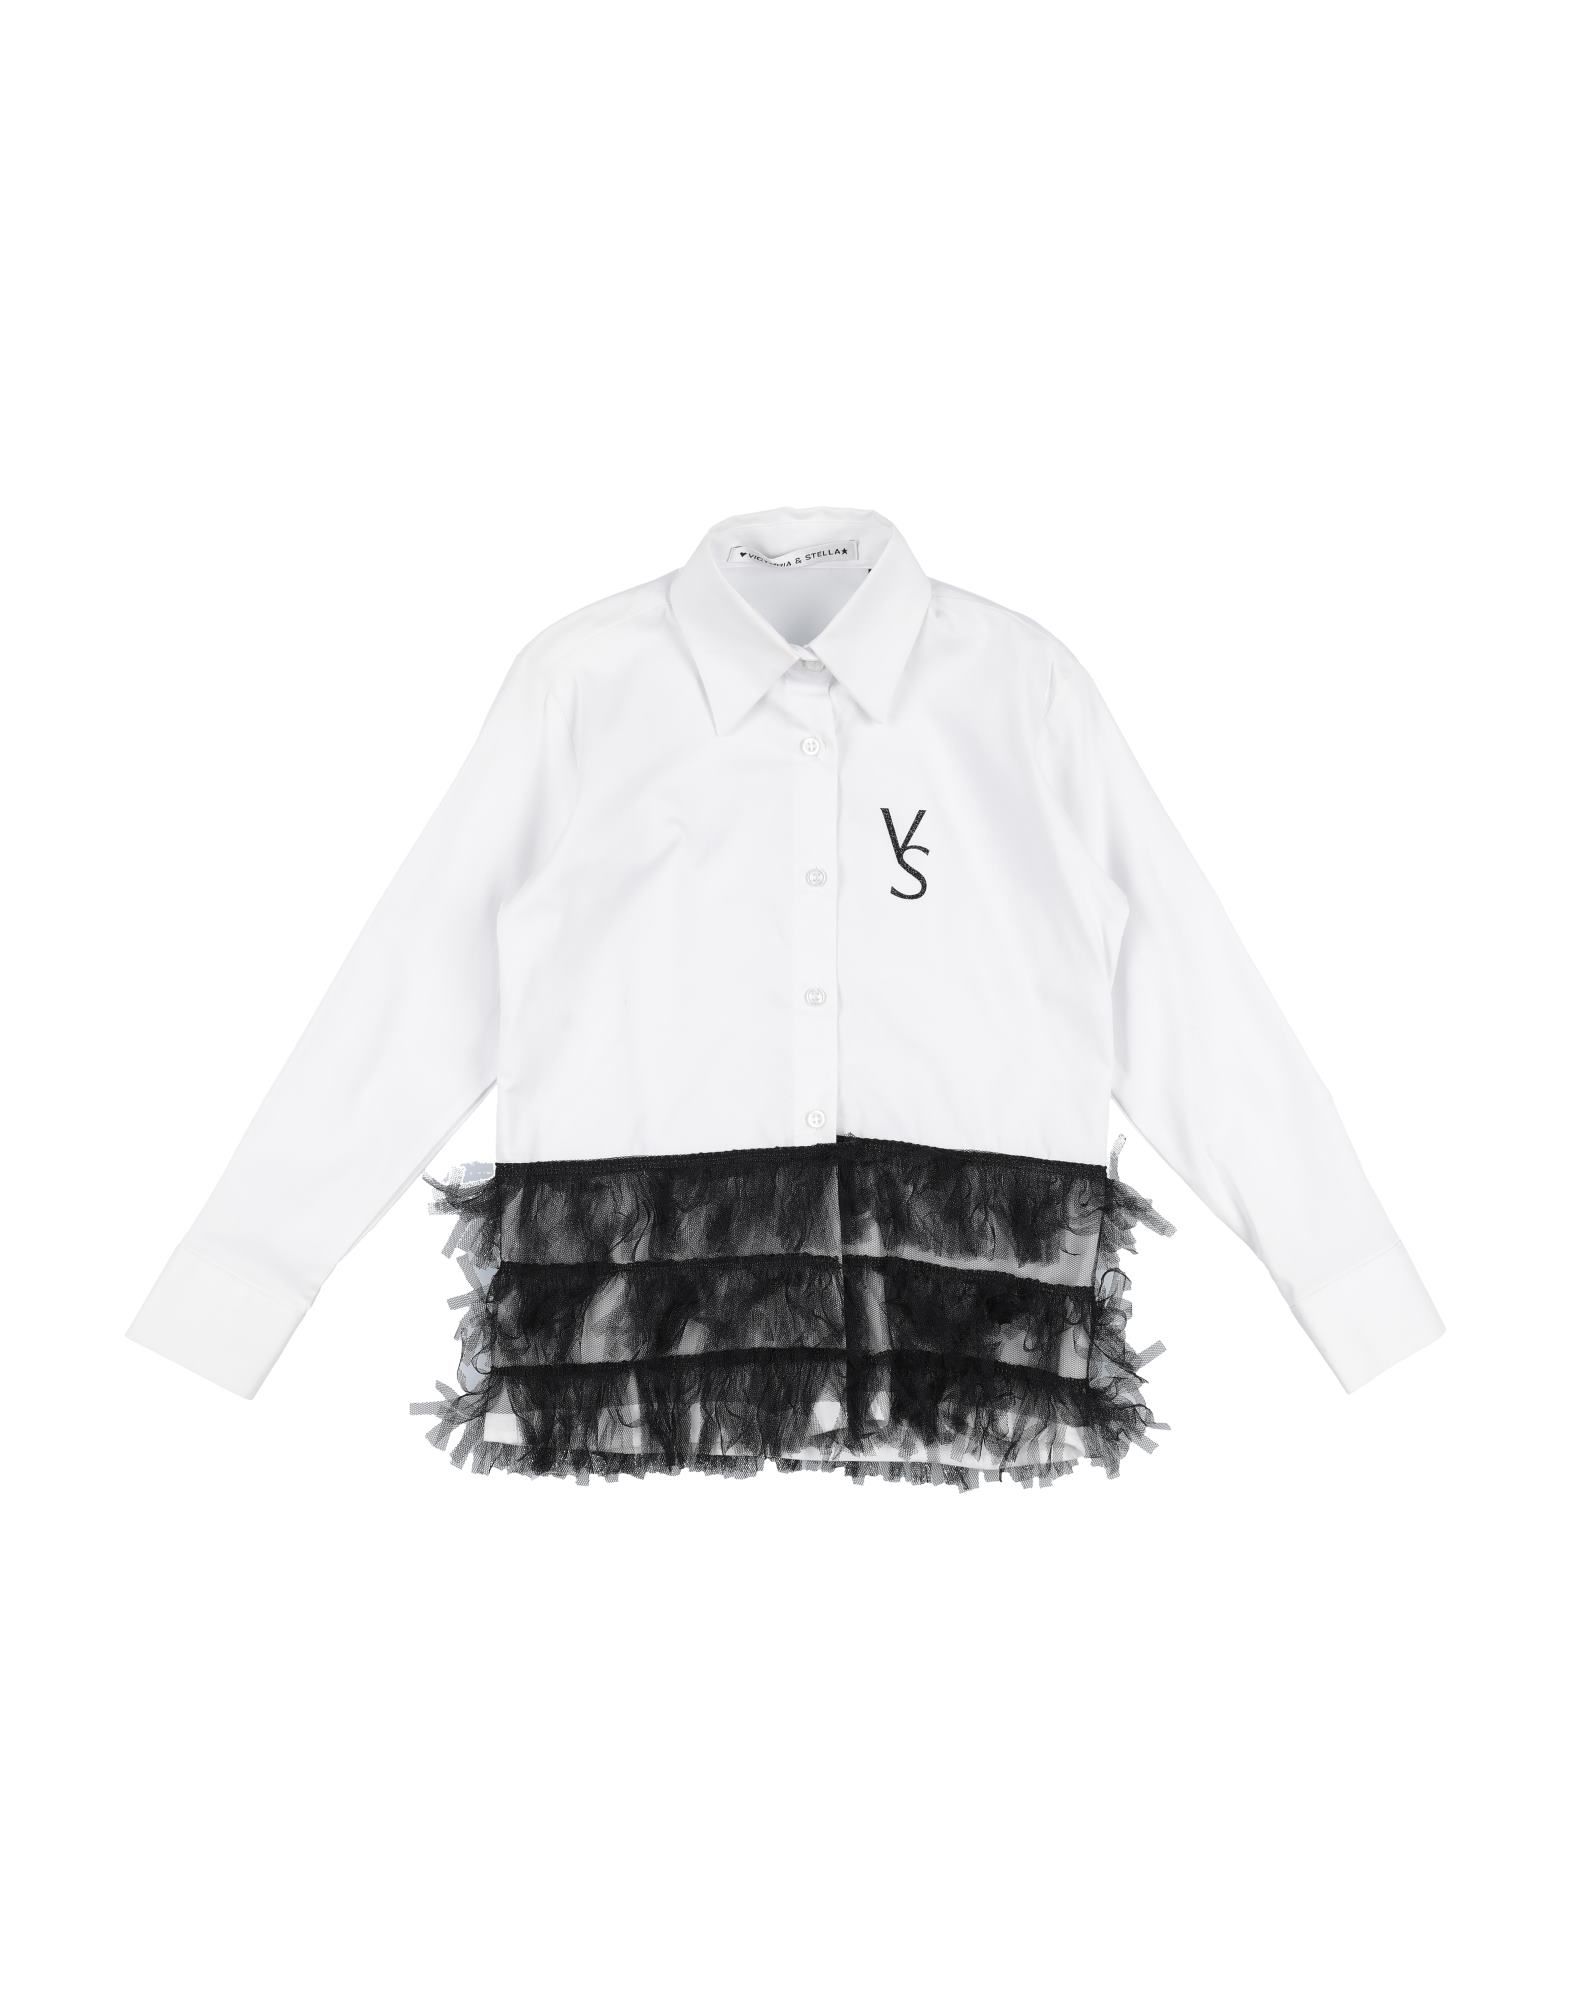 Victoria & Stella Kids' Shirts In White